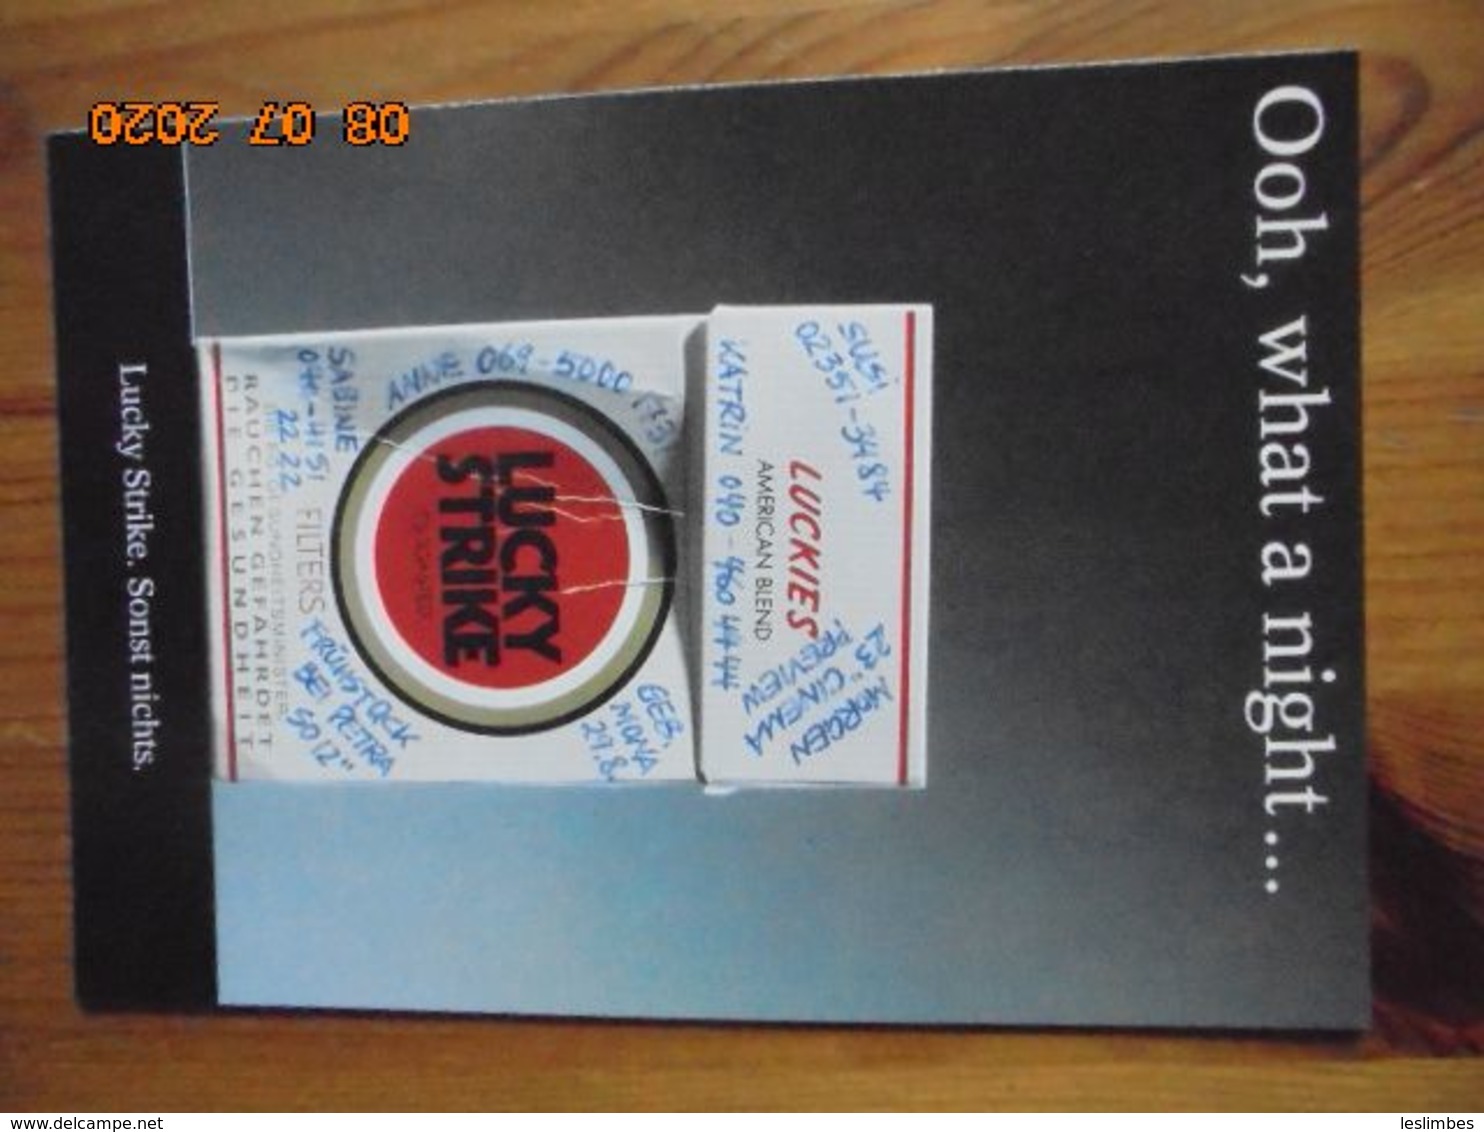 Carte Postale Publicitaire Allemand (Taschen 1996) 16,3 X 11,4 Cm. Lucky Strike. Sonst Nichts. "Ooh, What A Night" 1991 - Objets Publicitaires